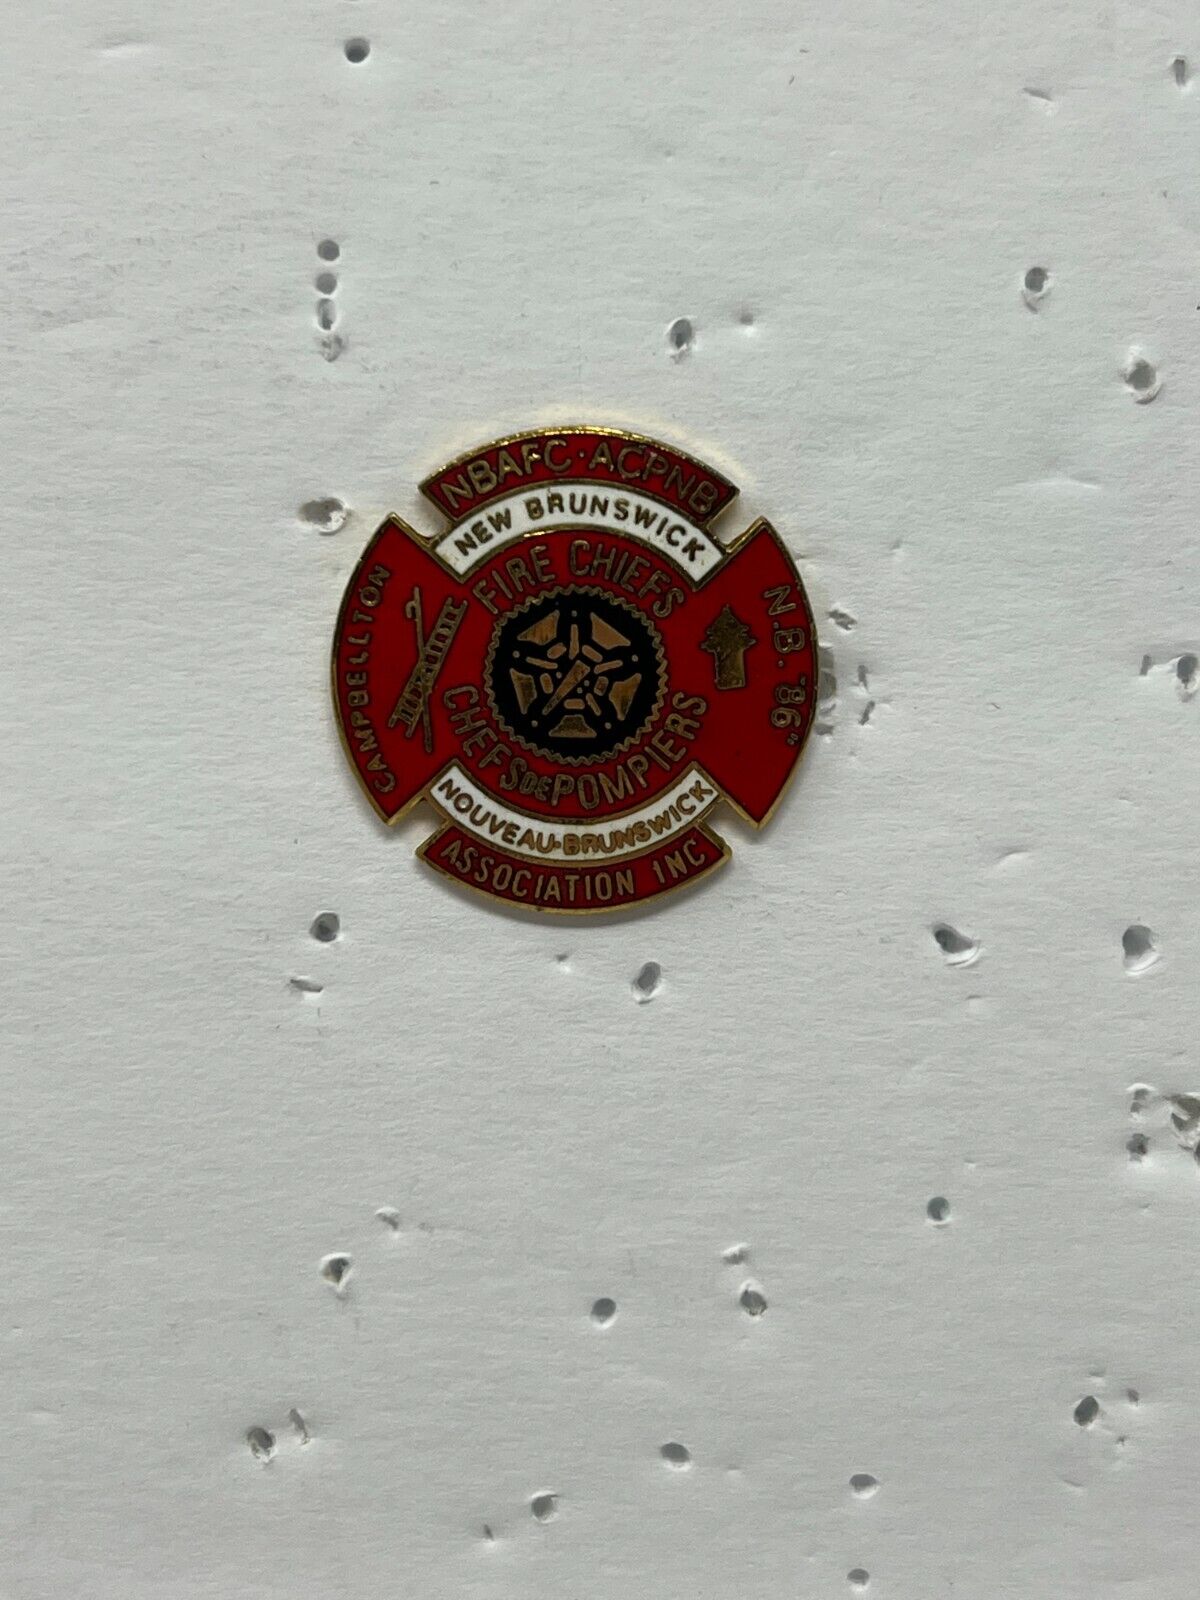 NBACF New Brunswick Association of Fire Chiefs 1986 Emergency Services Lapel Pin